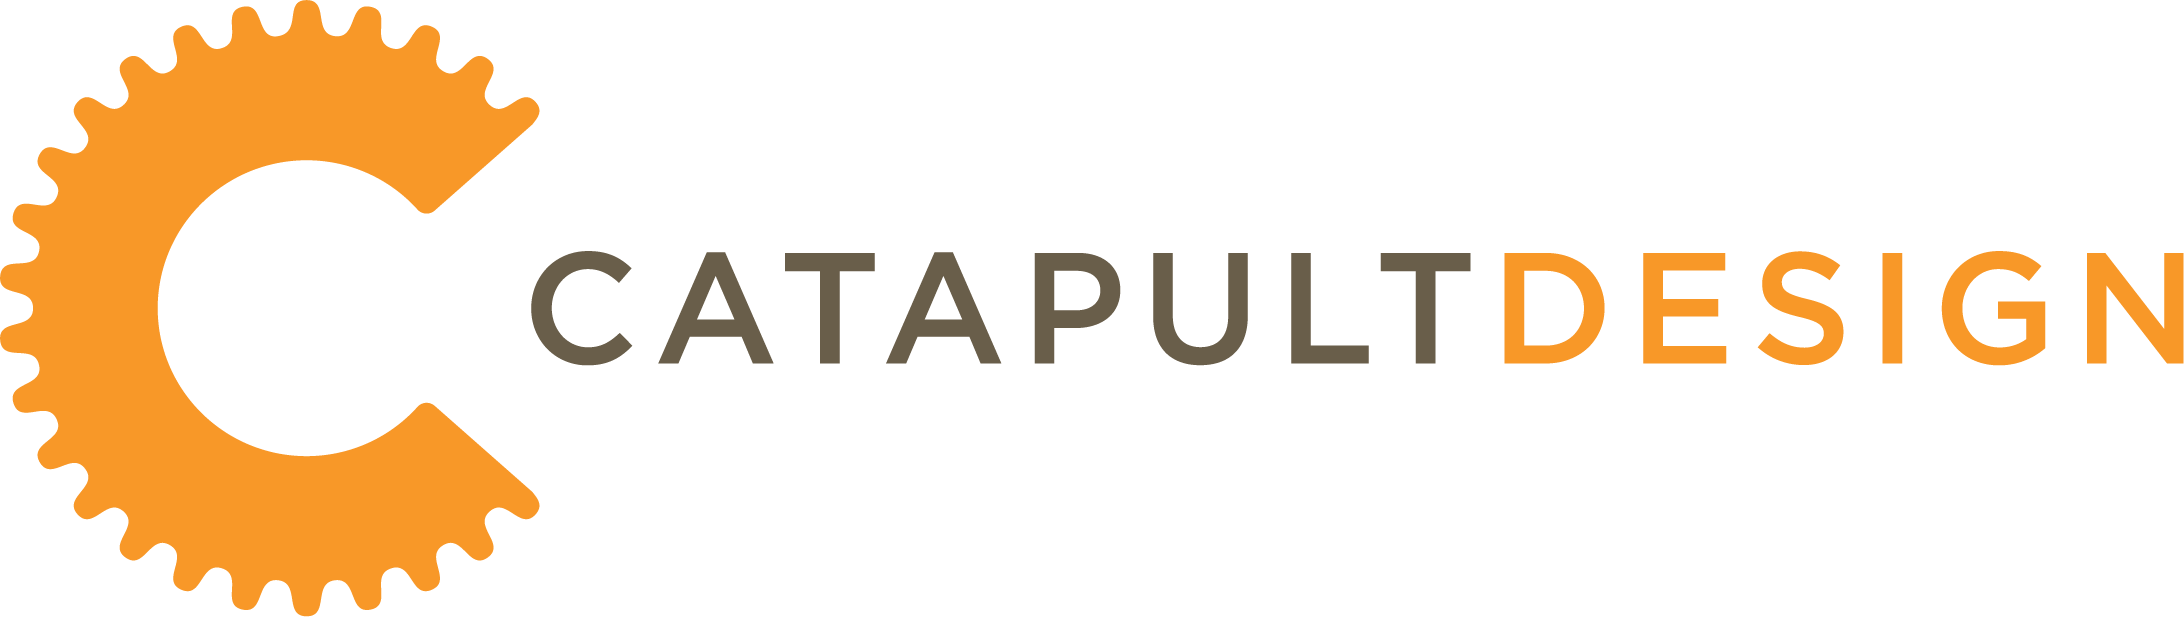 Catapult Design logo